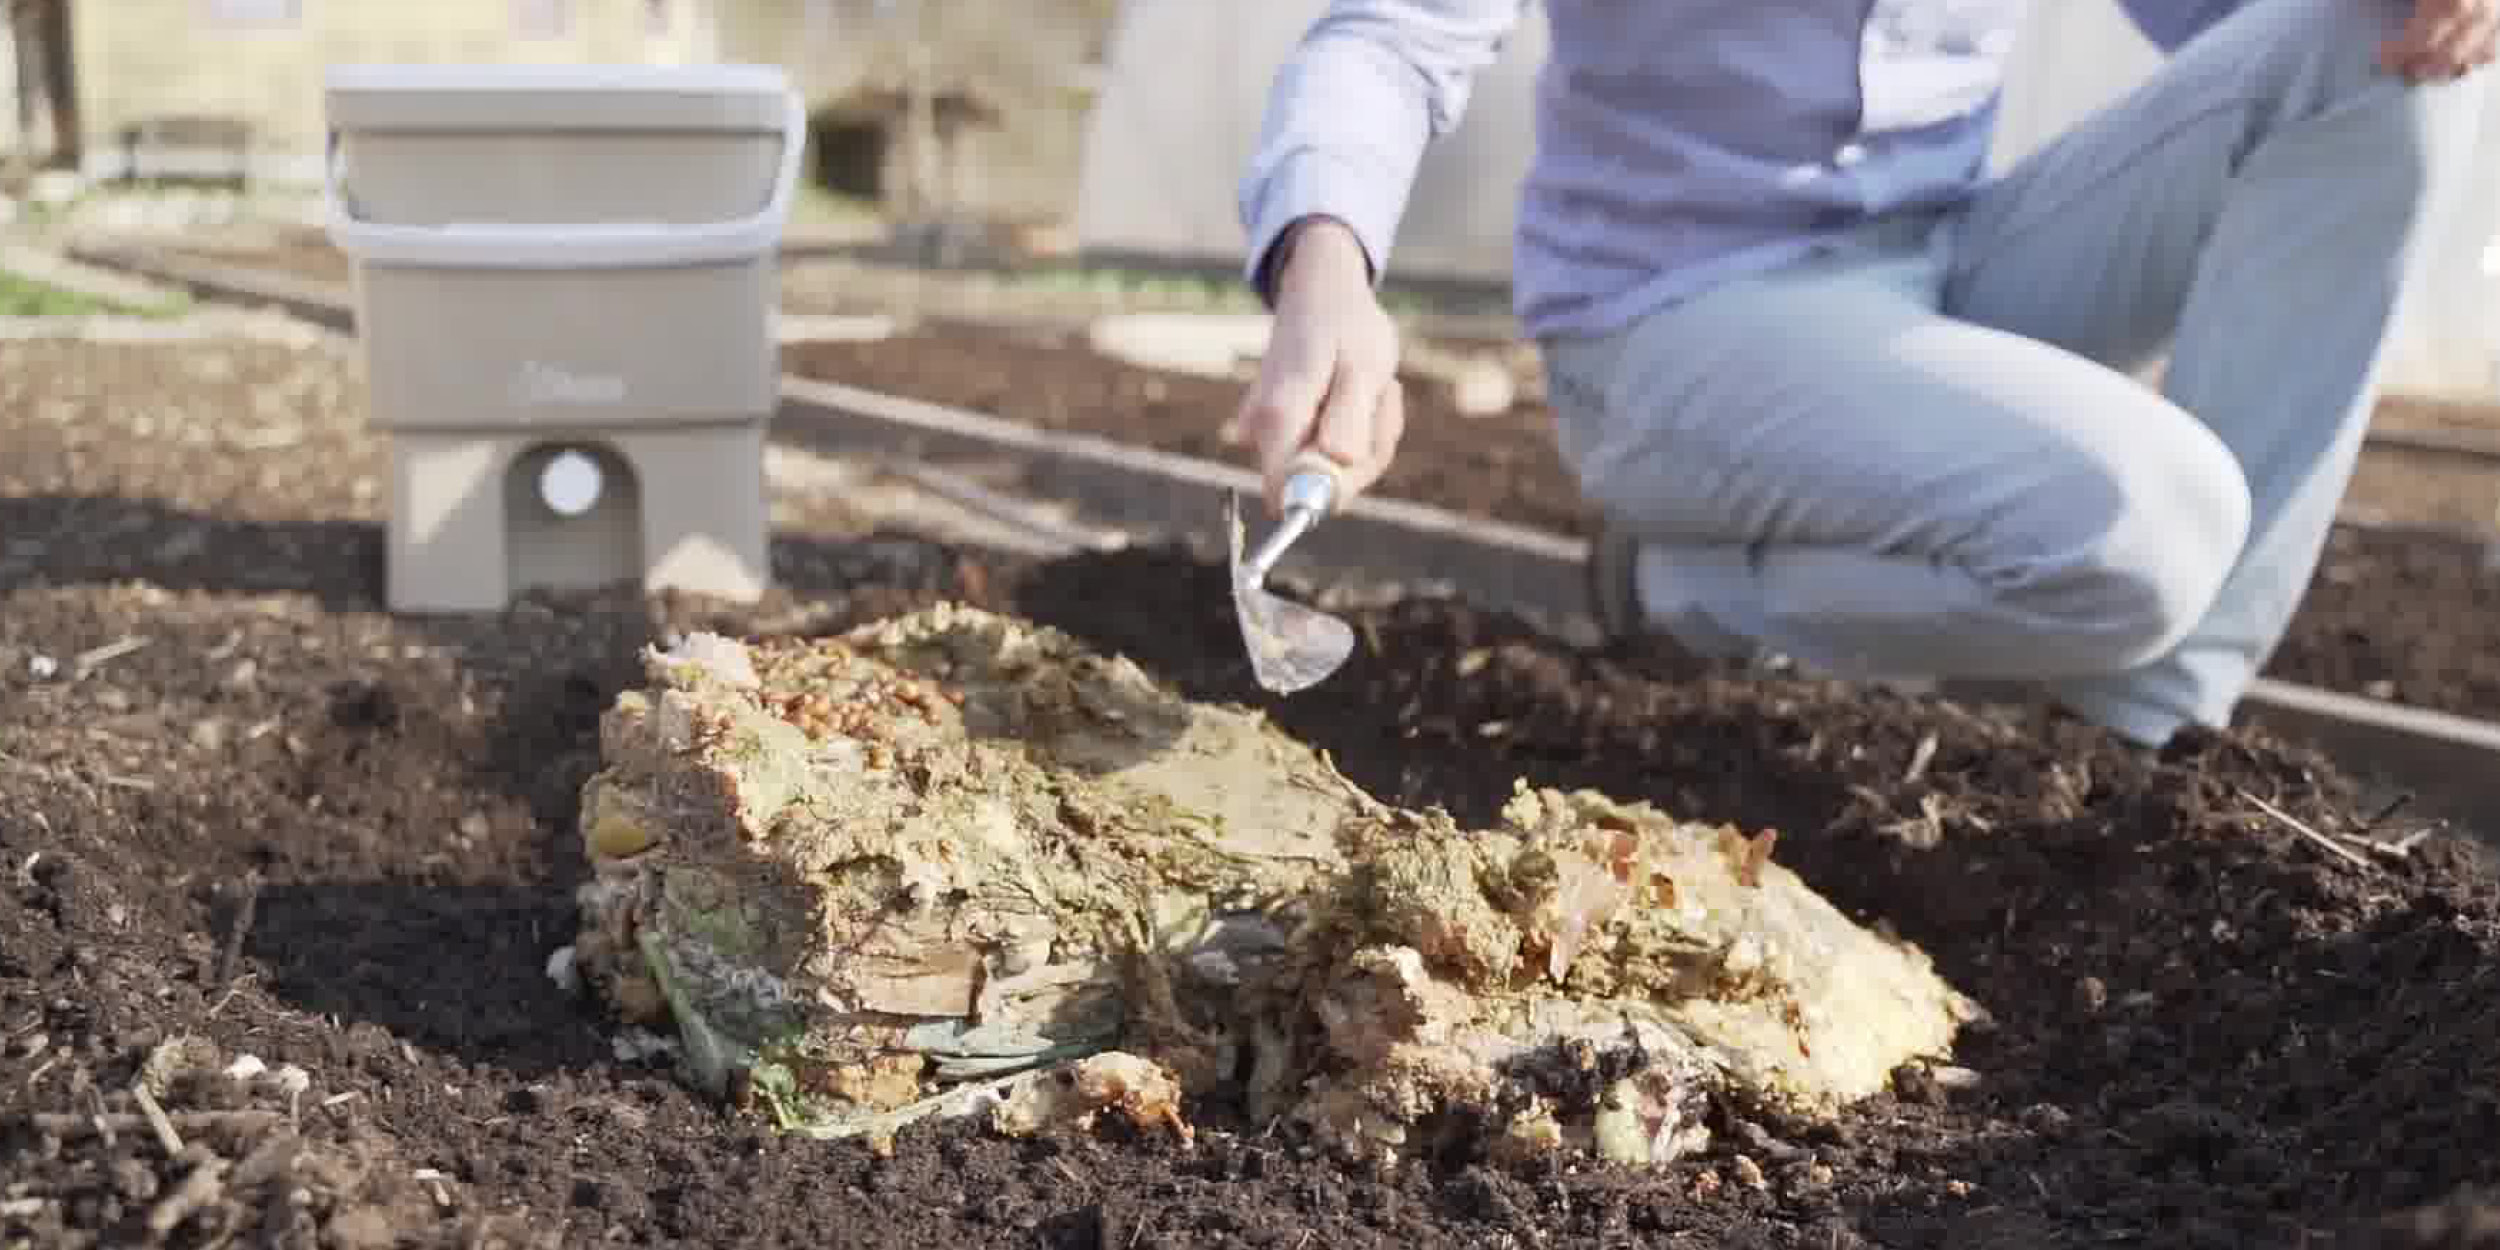 Mix bokashi pre-compost with your garden soil